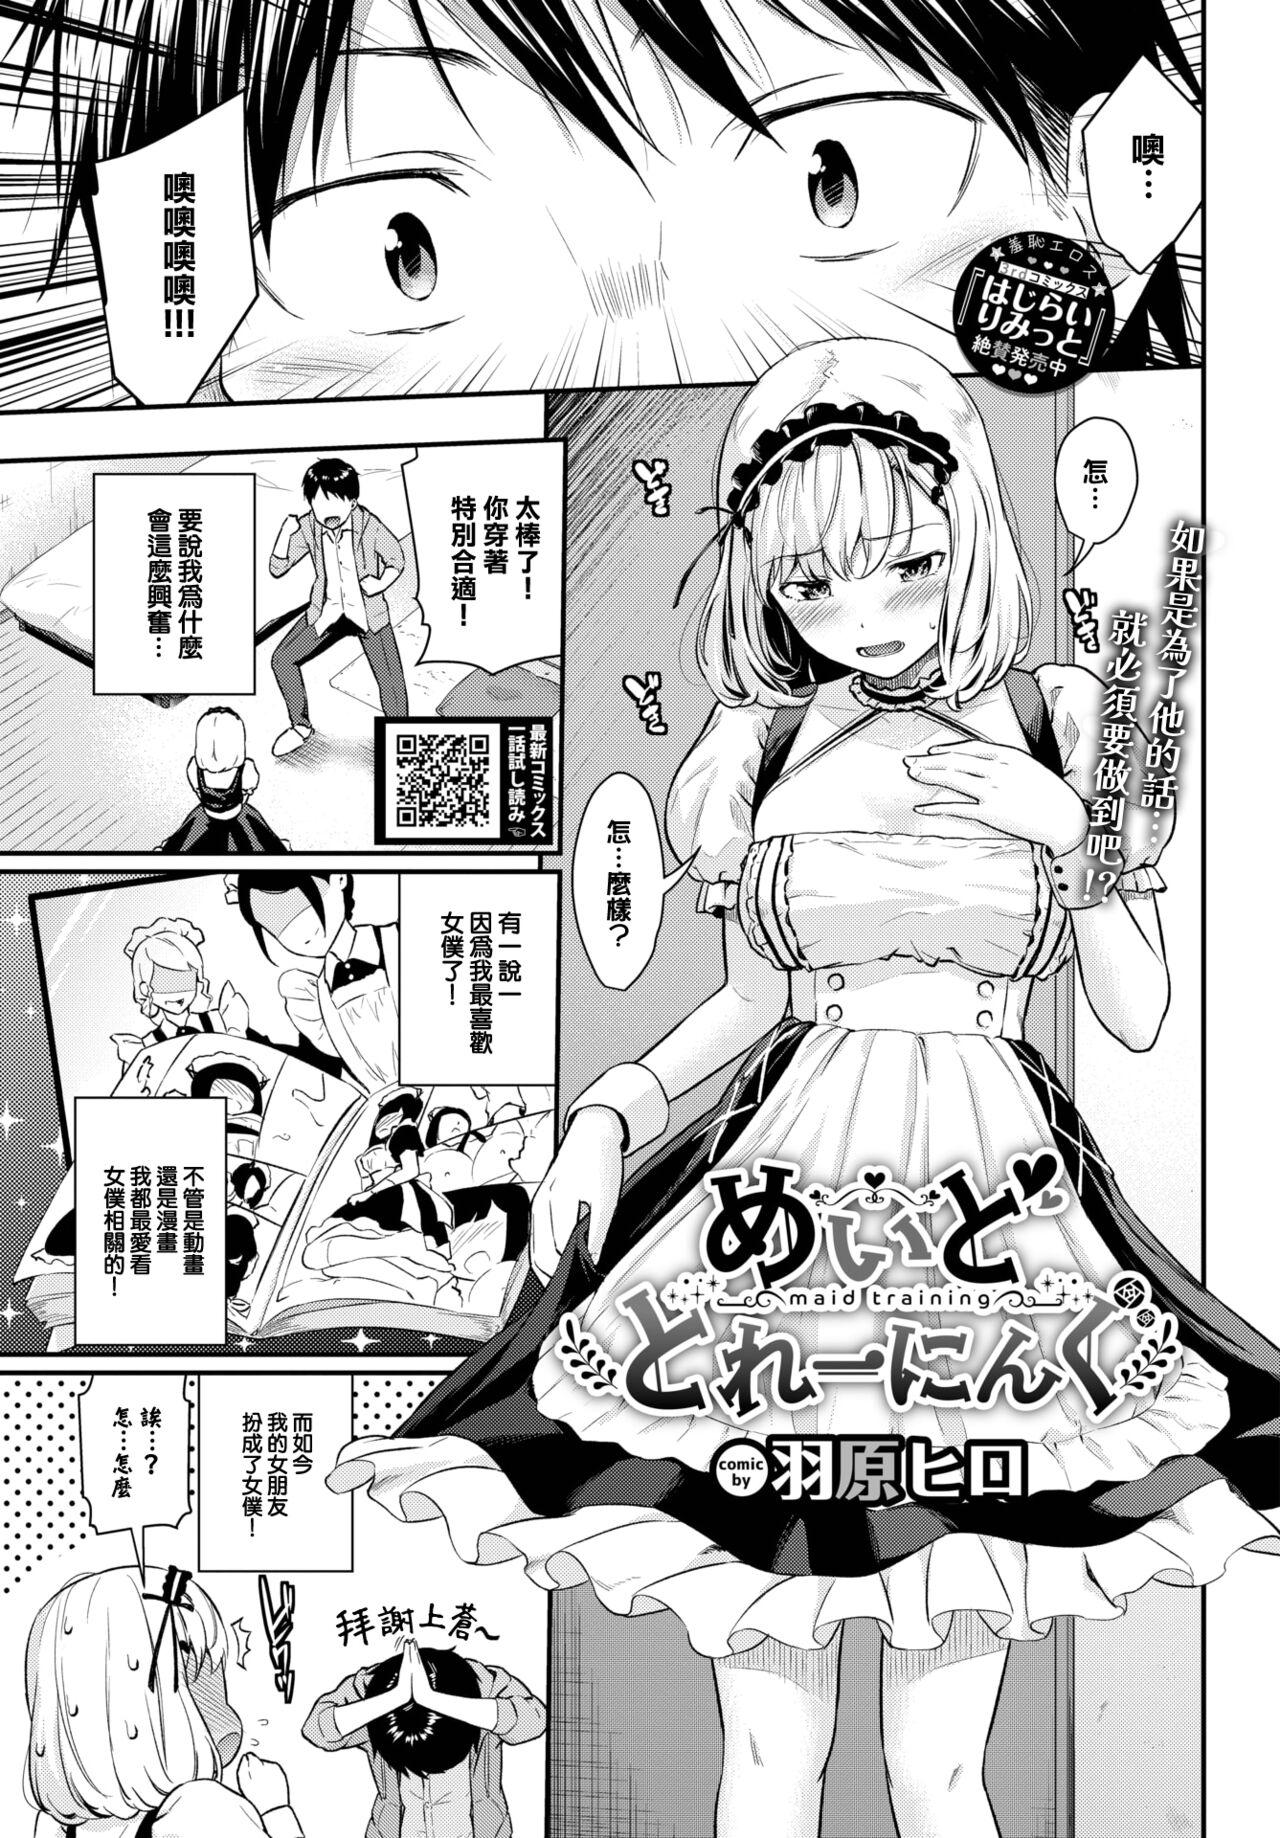 Sapphic Maid Training Cheat - Page 2